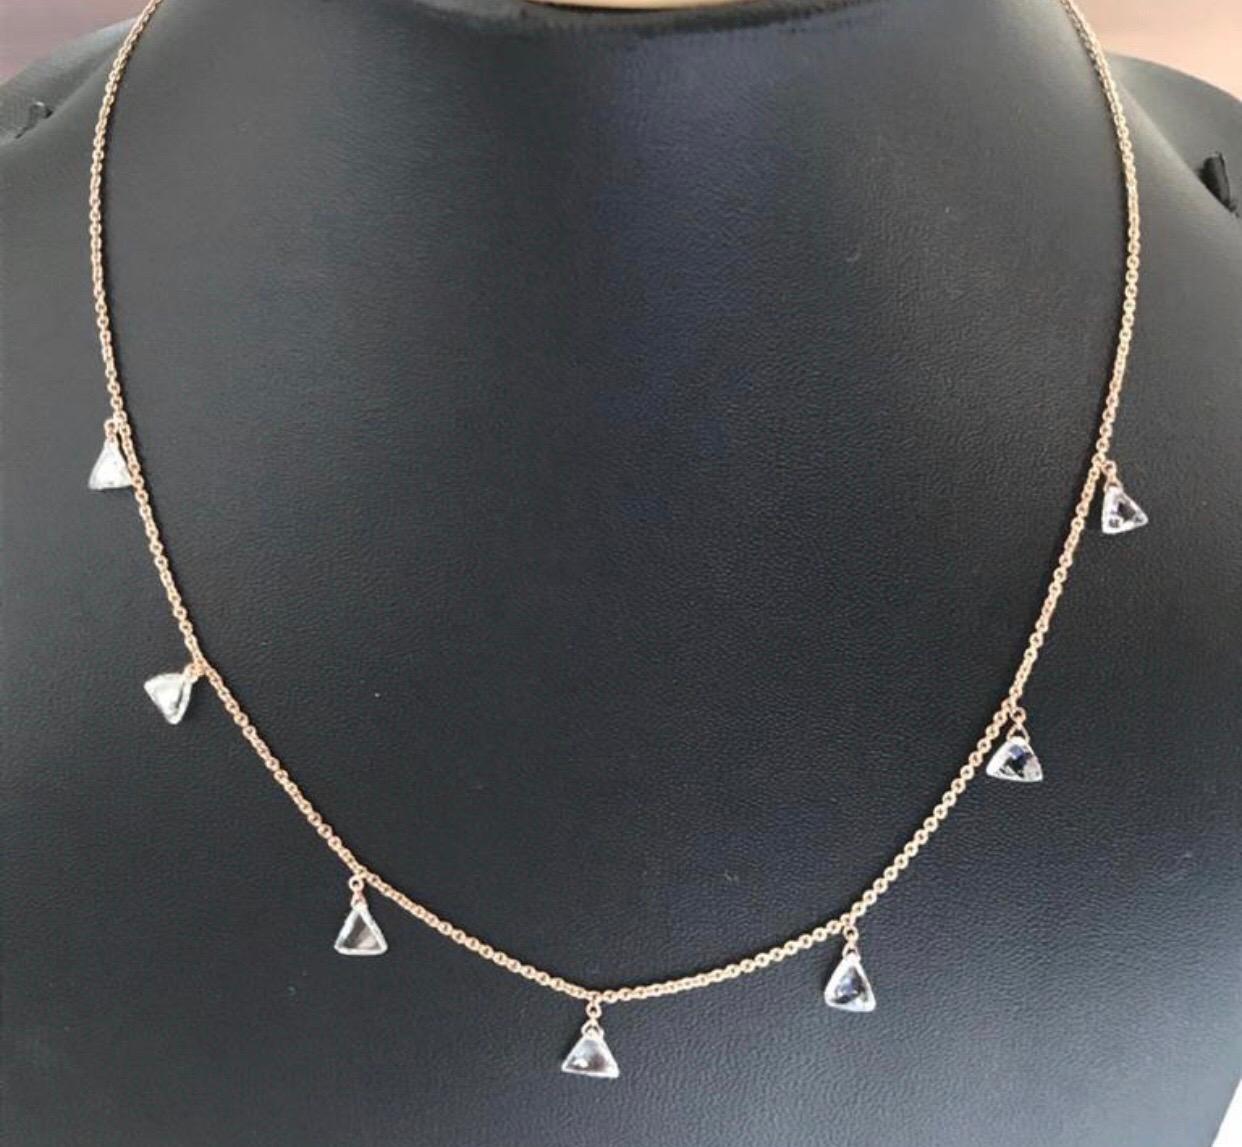 Briolette Cut PANIM 18 Karat Diamond Taviz Choker Necklace in 18K White Gold For Sale